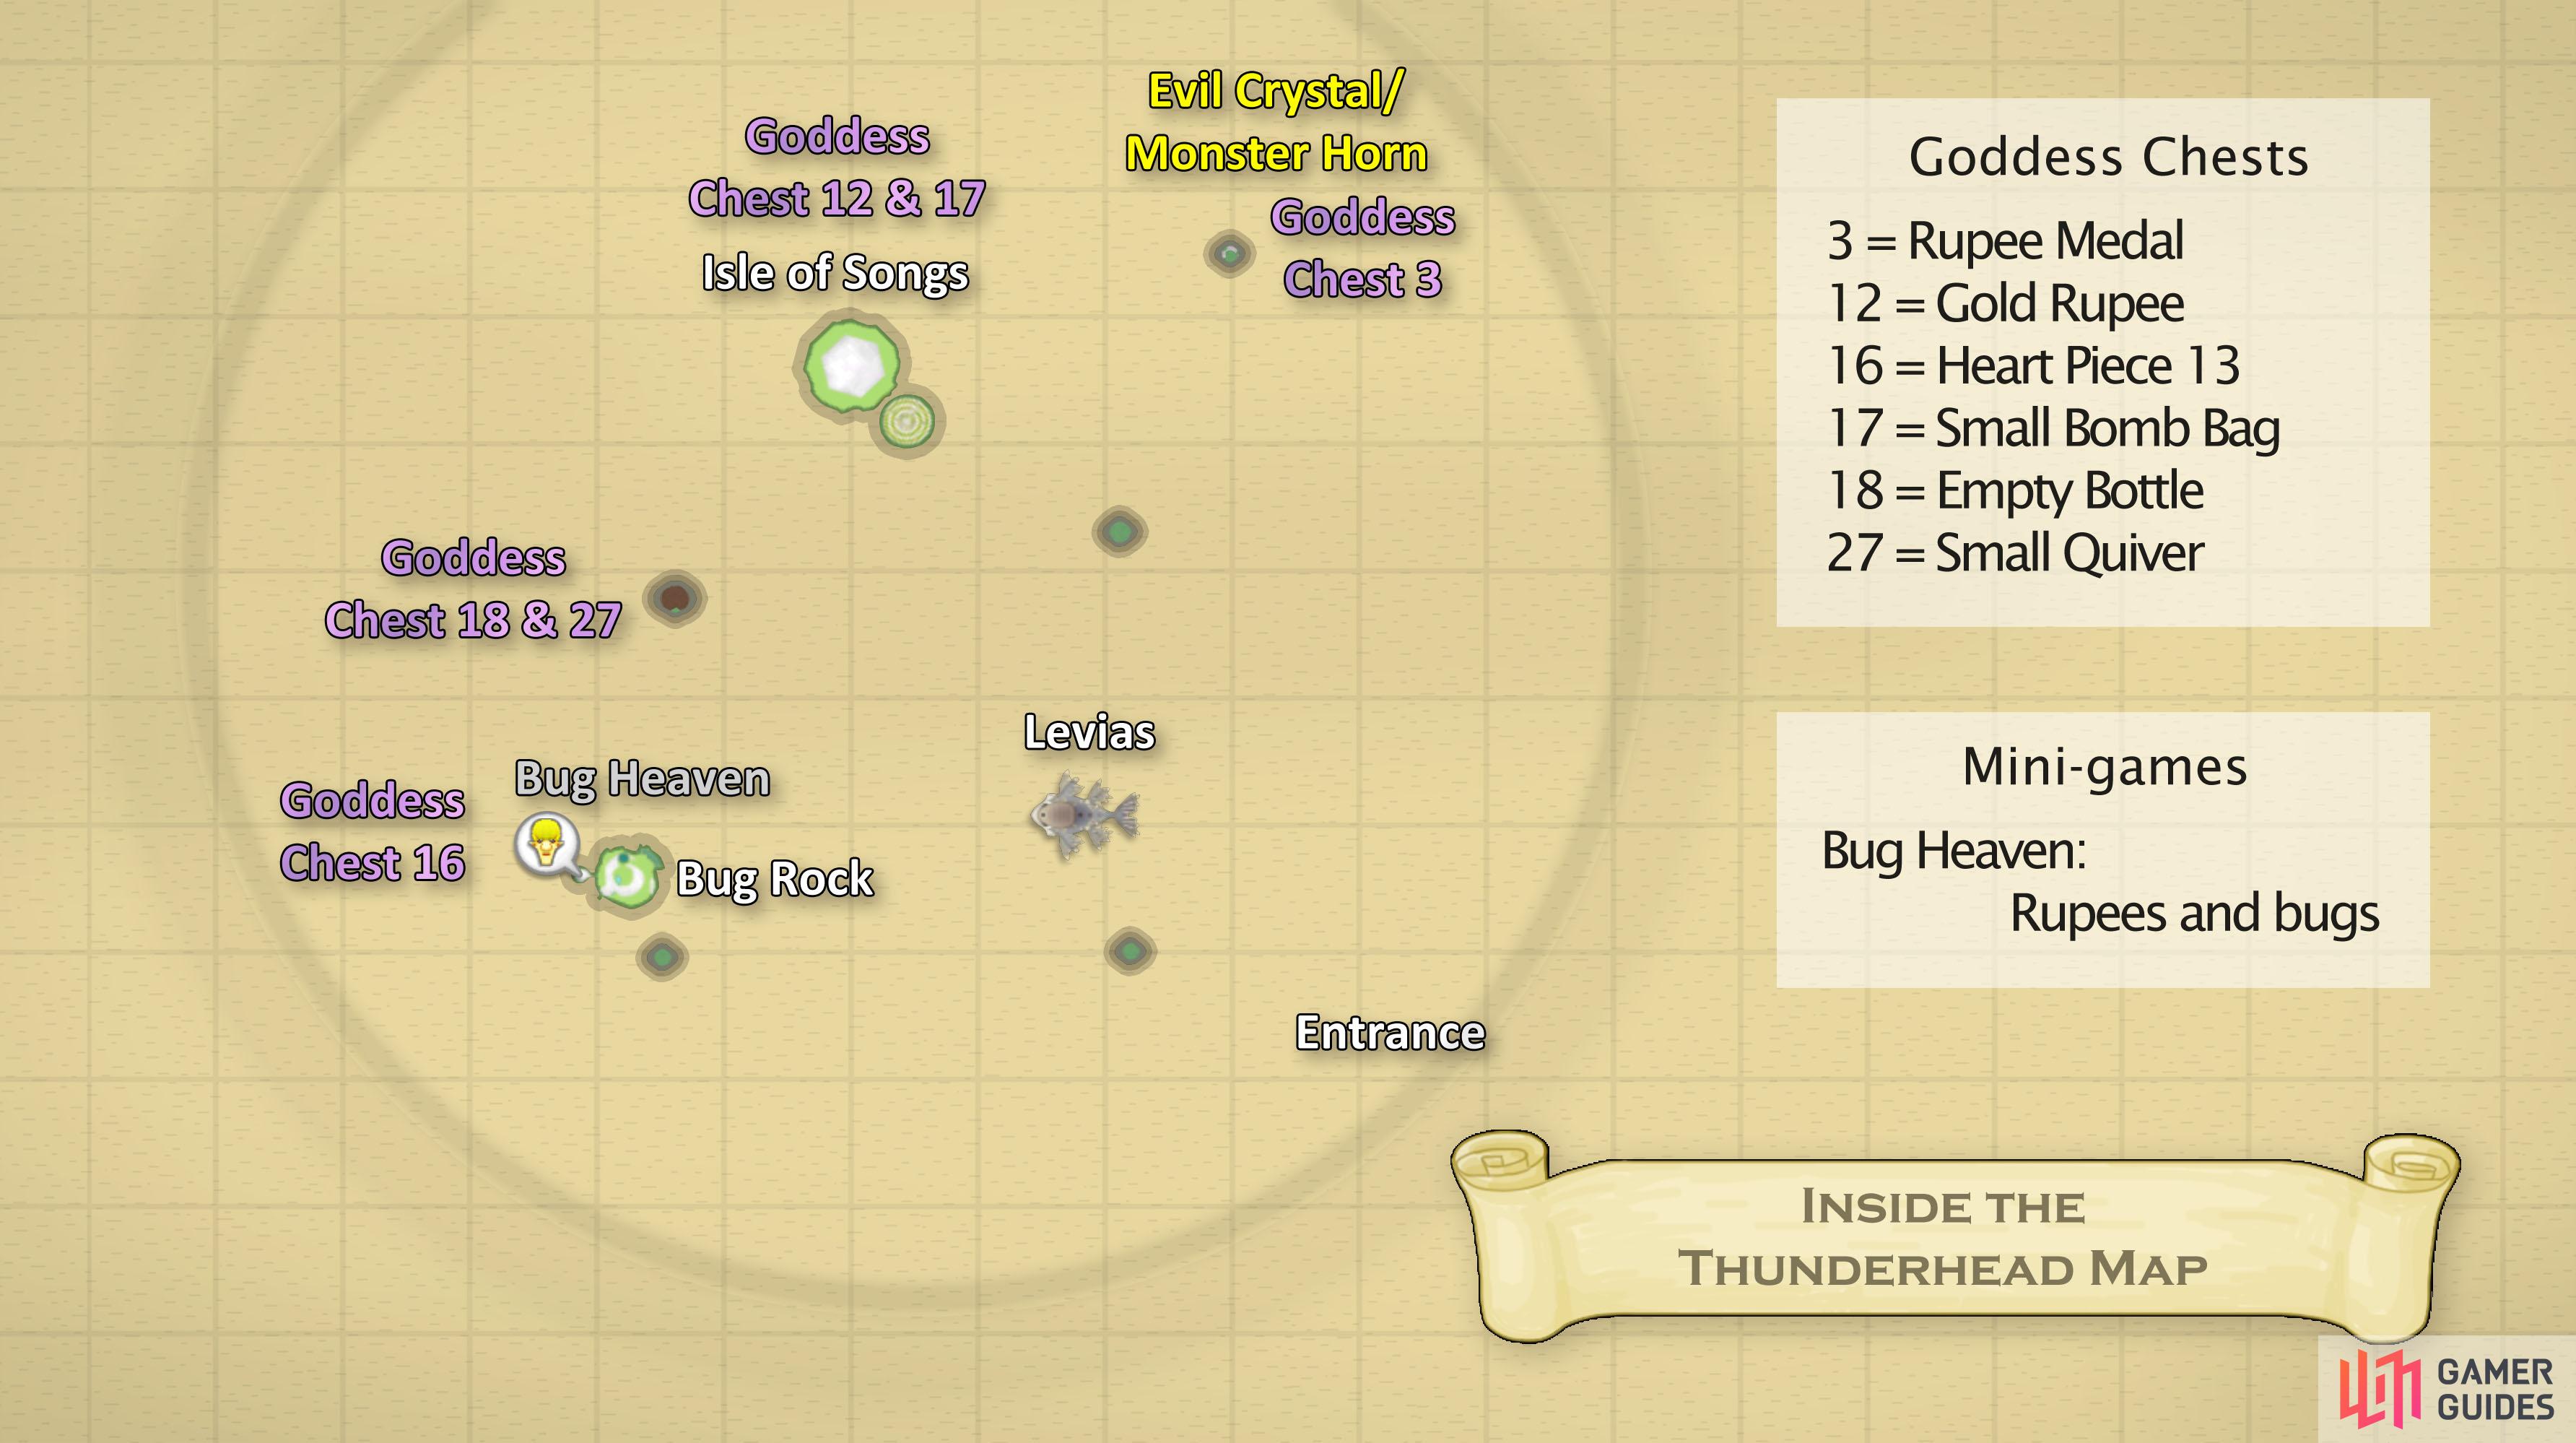 Map of Inside the Thunderhead